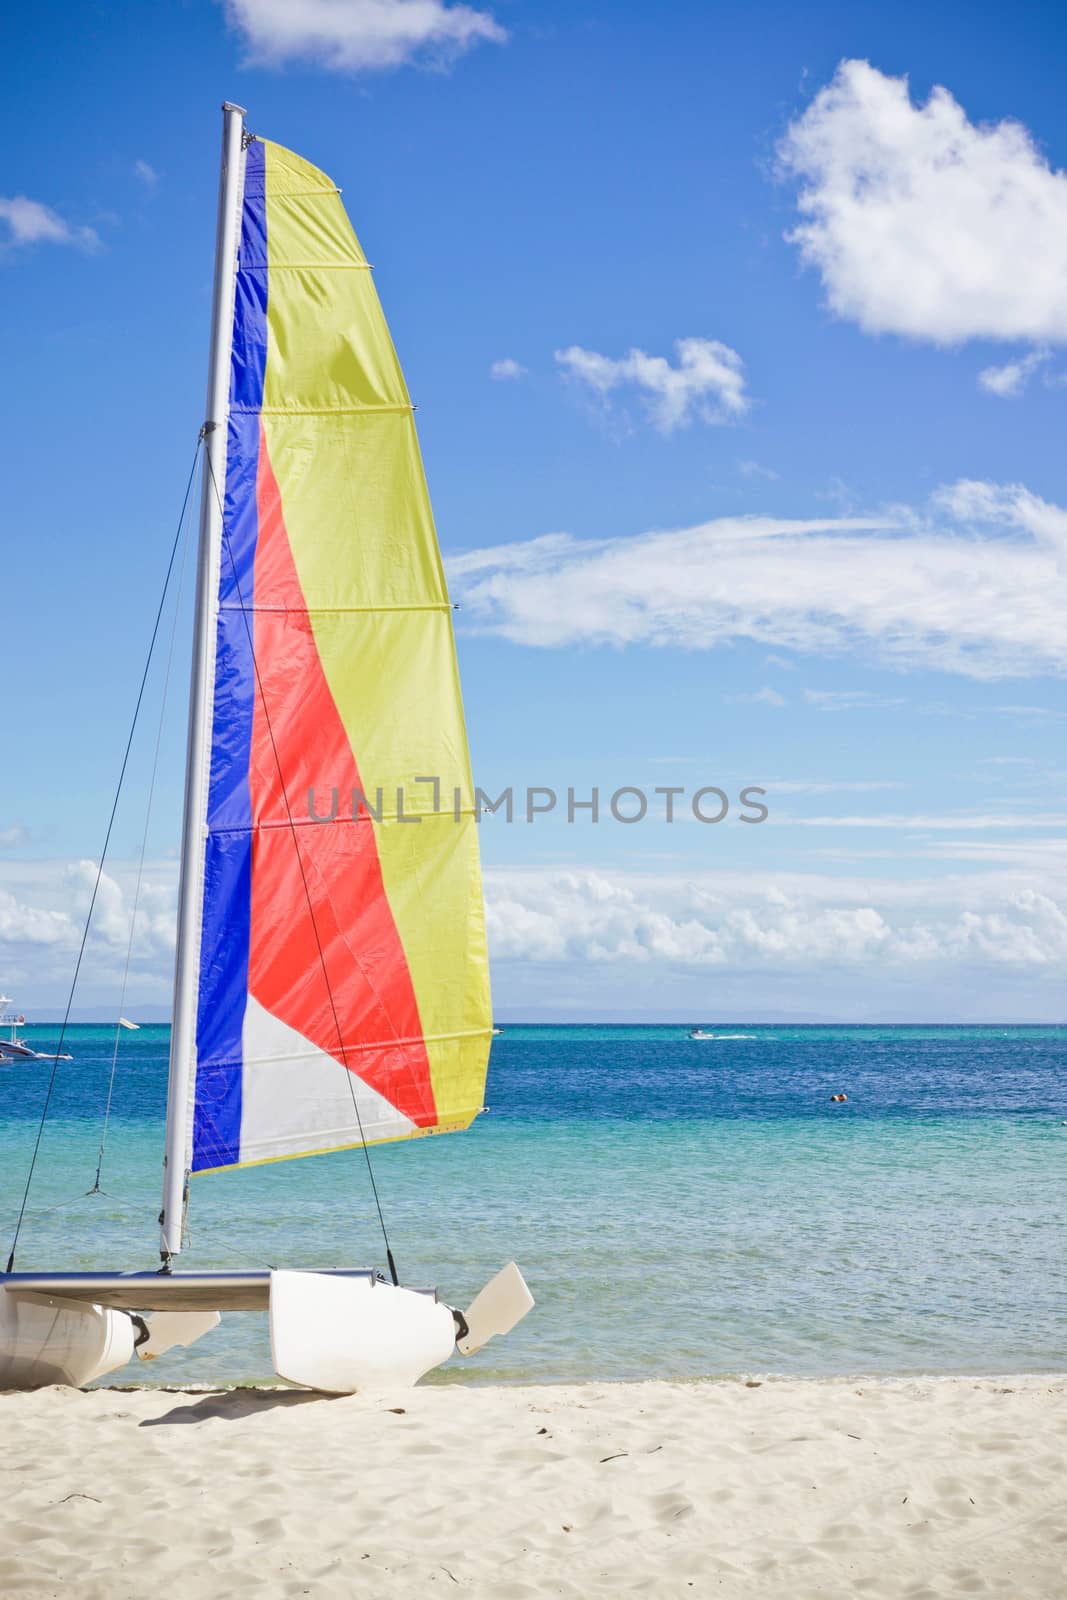 Small catamaran sailing dinghy on a sandy beach with a colourful sail against a tropical ocean backdrop